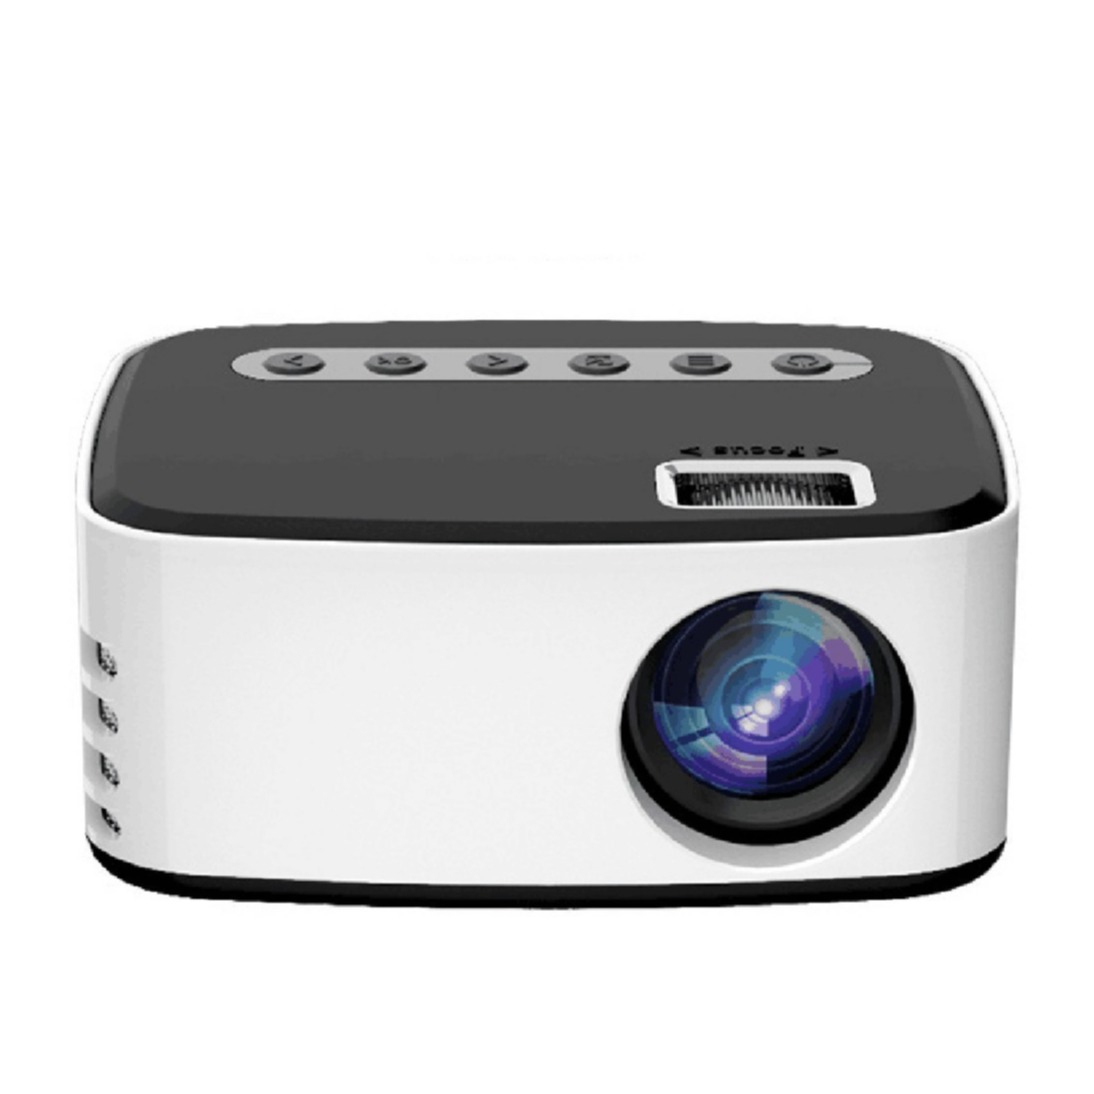 Mini Multimedia LED Projektor Beamer Heimkino (600 Lumen) 1080p Full HD /  WLAN / USB / AirPlay / Miracast - Grau / Schwarz